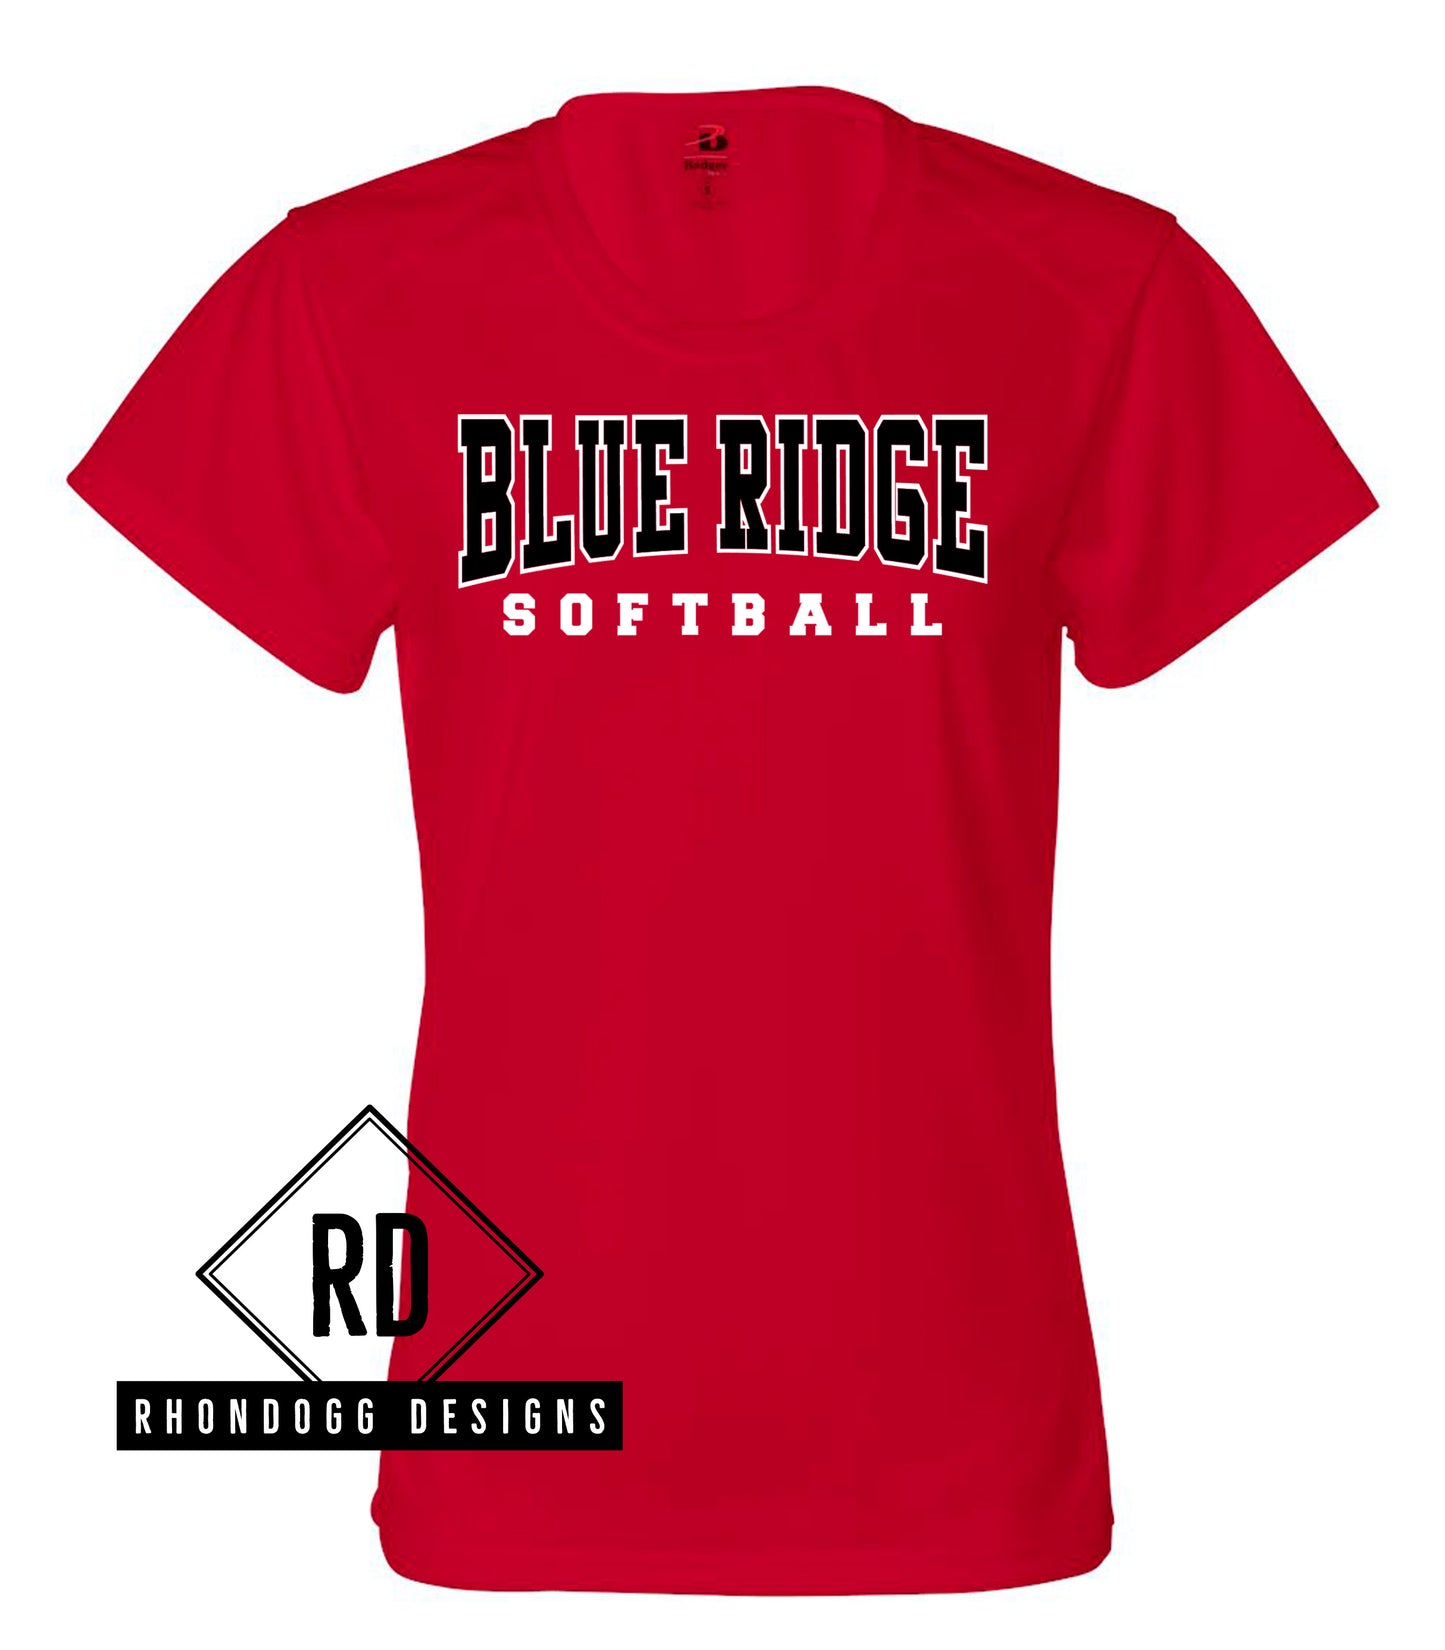 Blue Ridge Middle School Softball Women's Performance Shirt